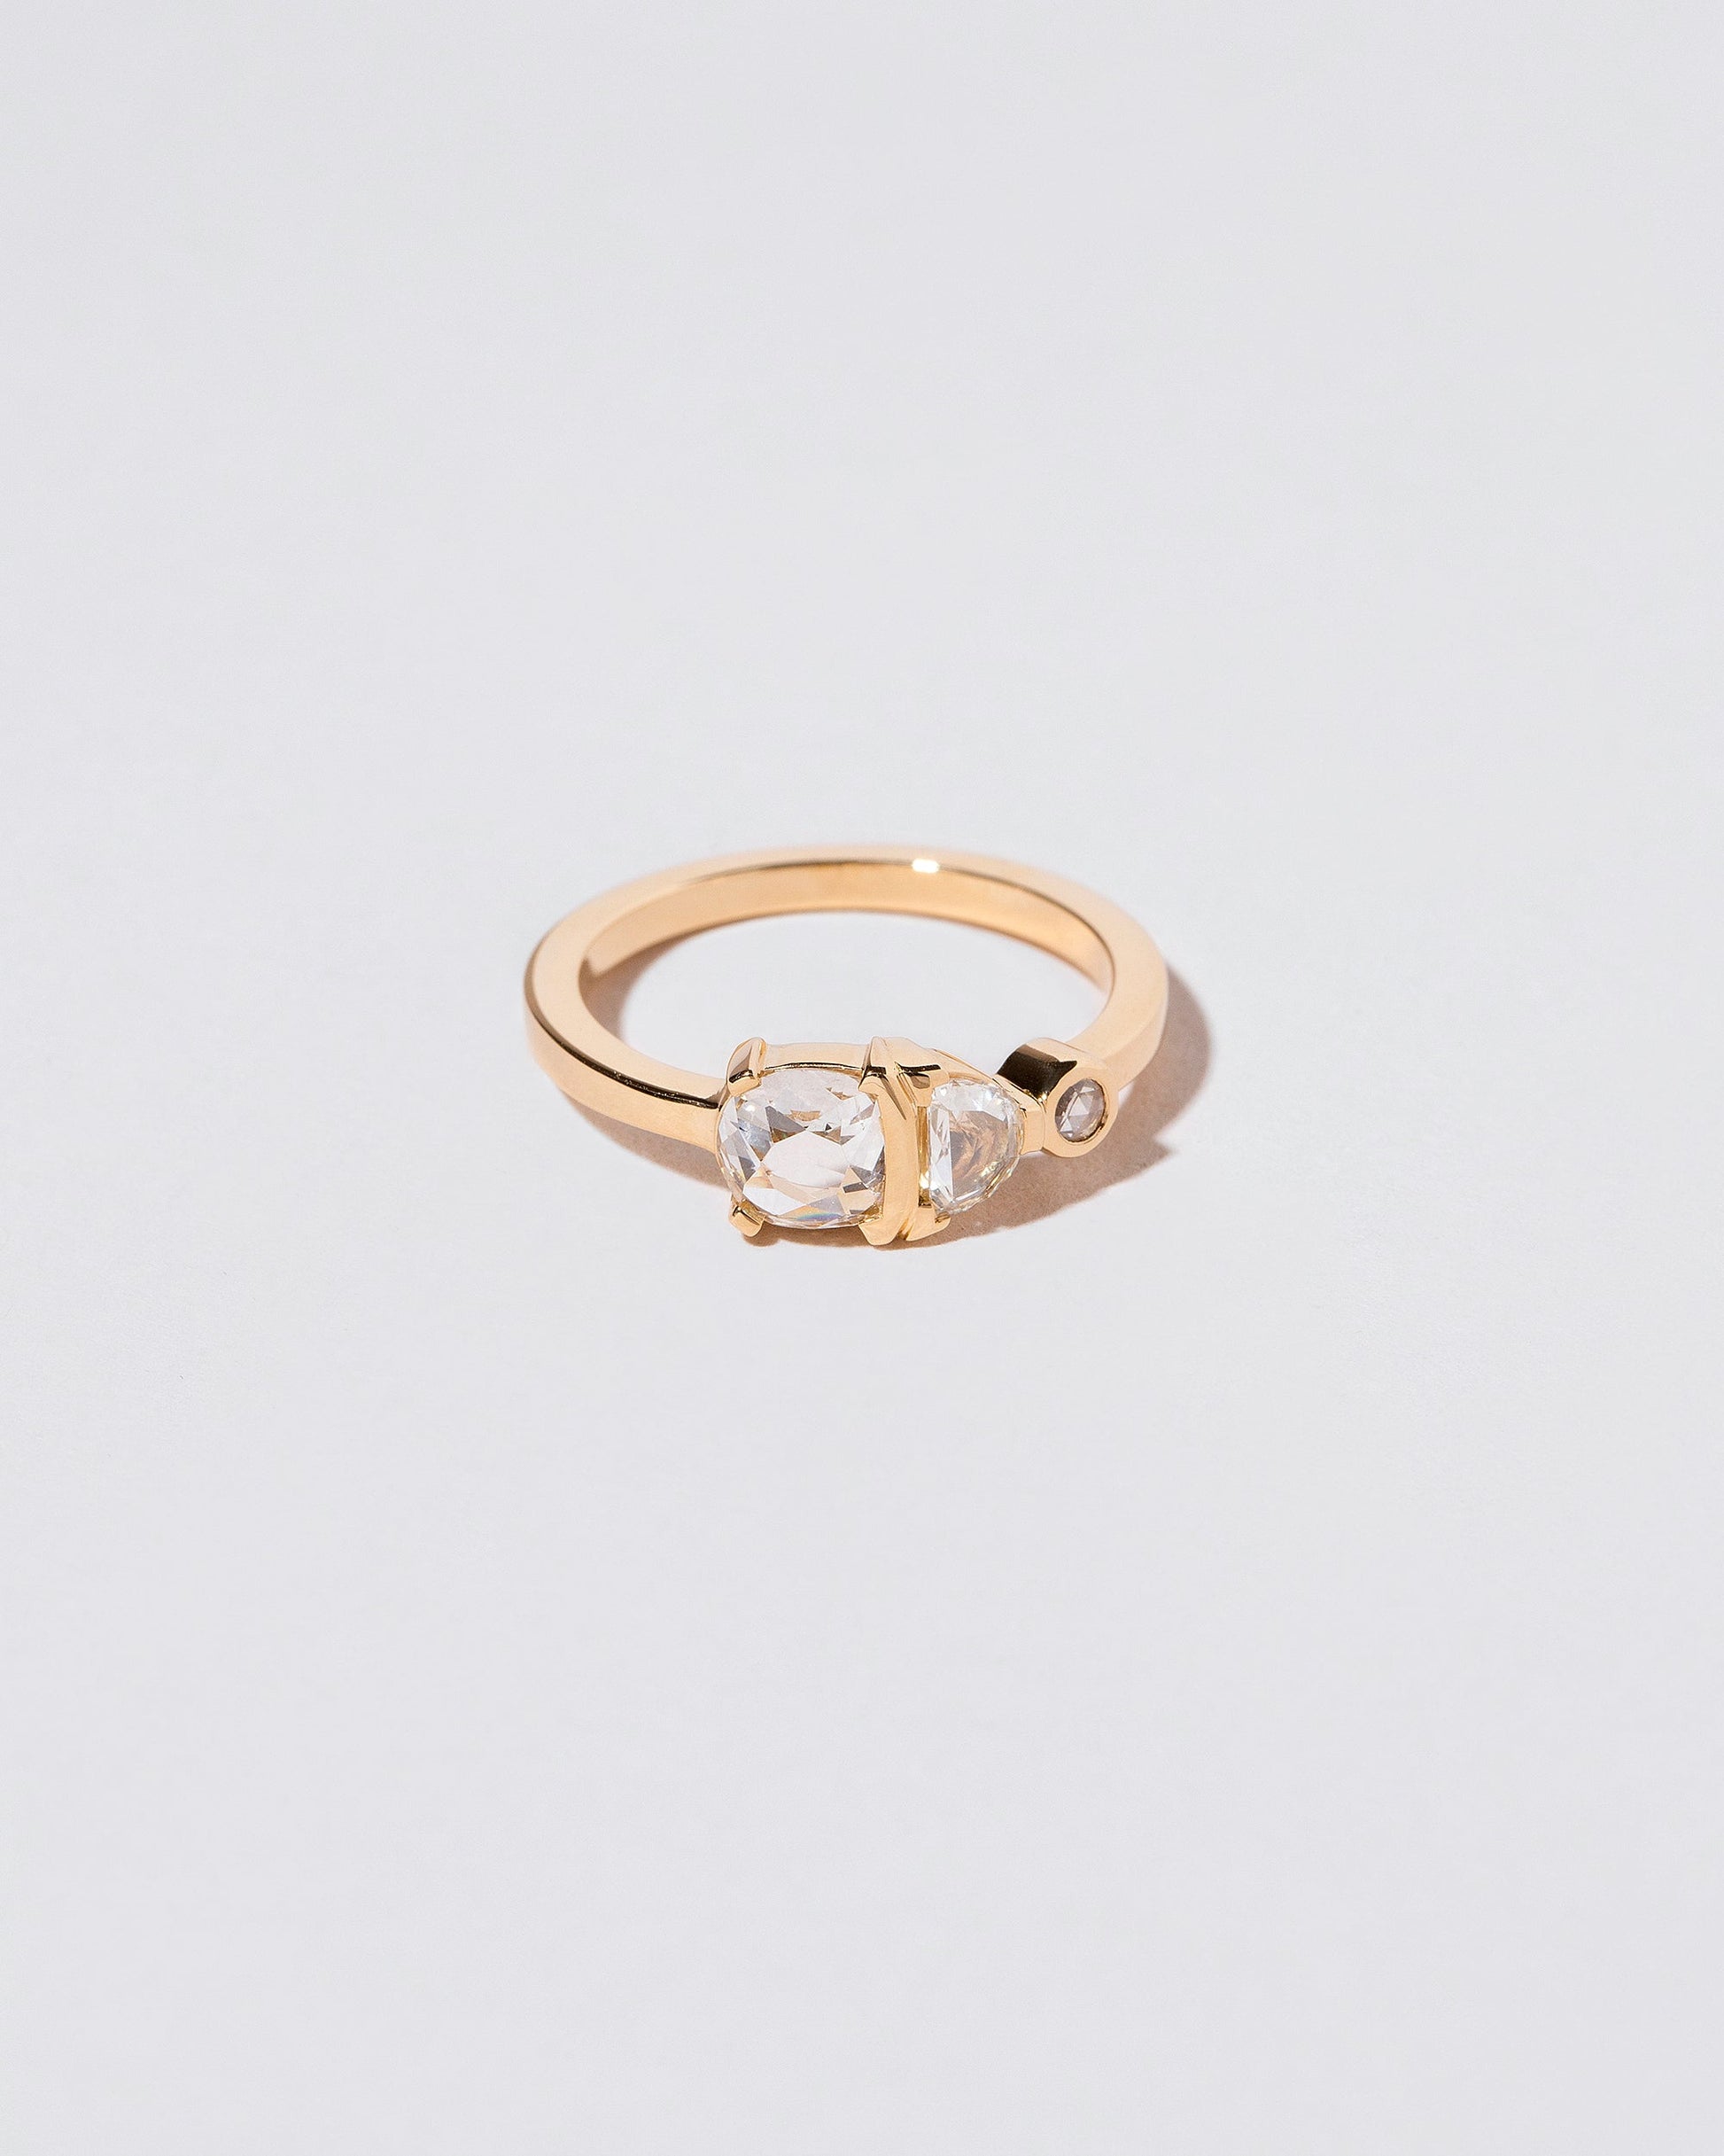  Sloane Ring on light color background.